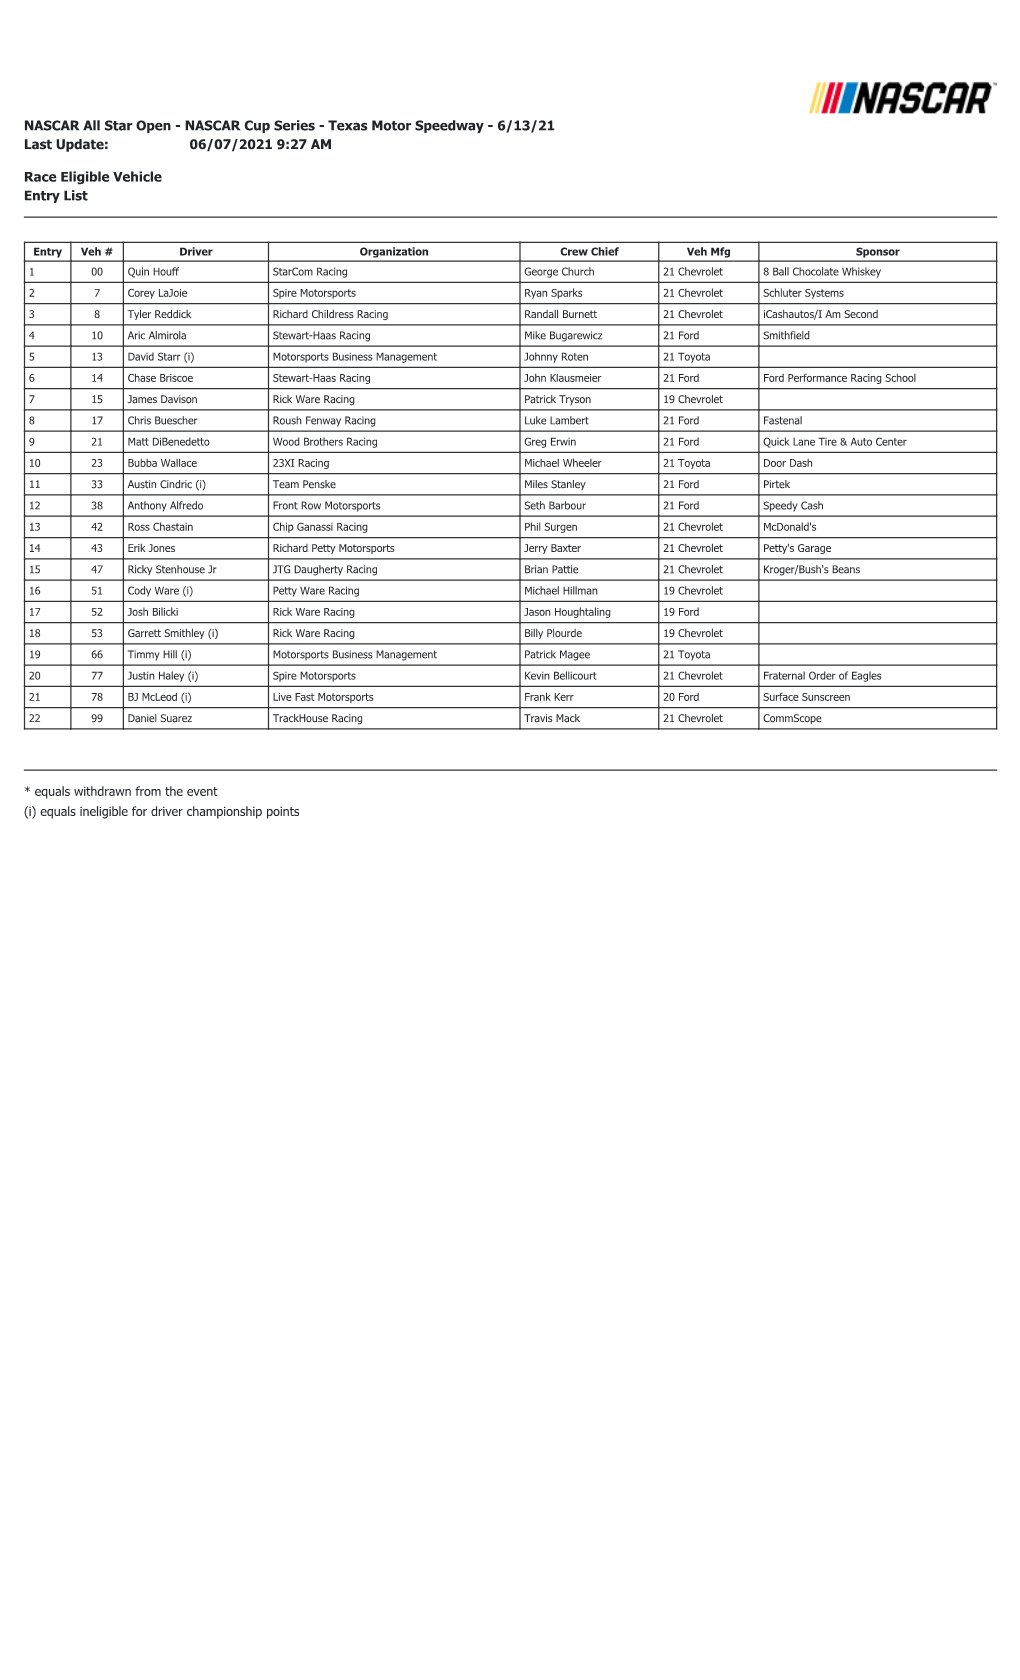 NASCAR Open Entry List